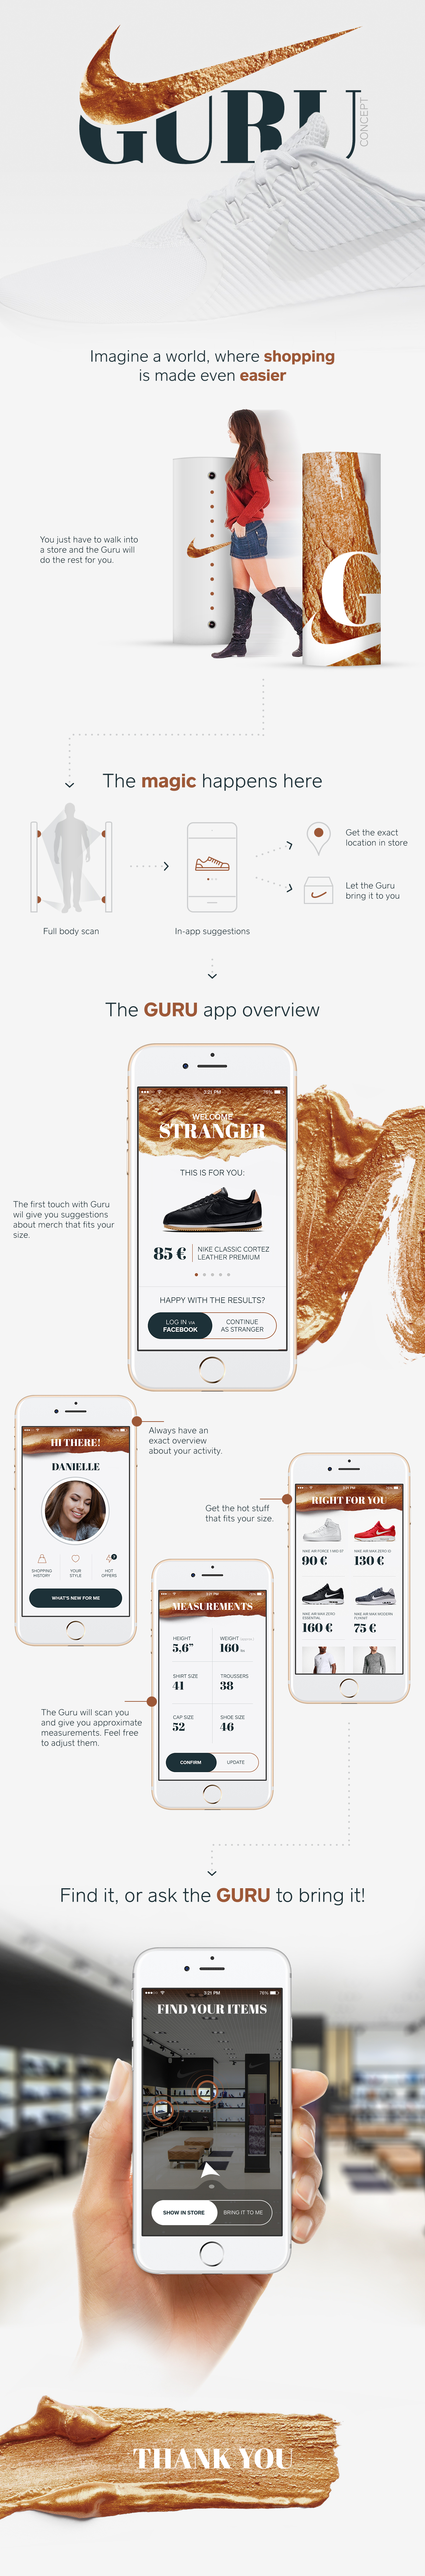 surdo app Guru Nike iphone product store Shopping